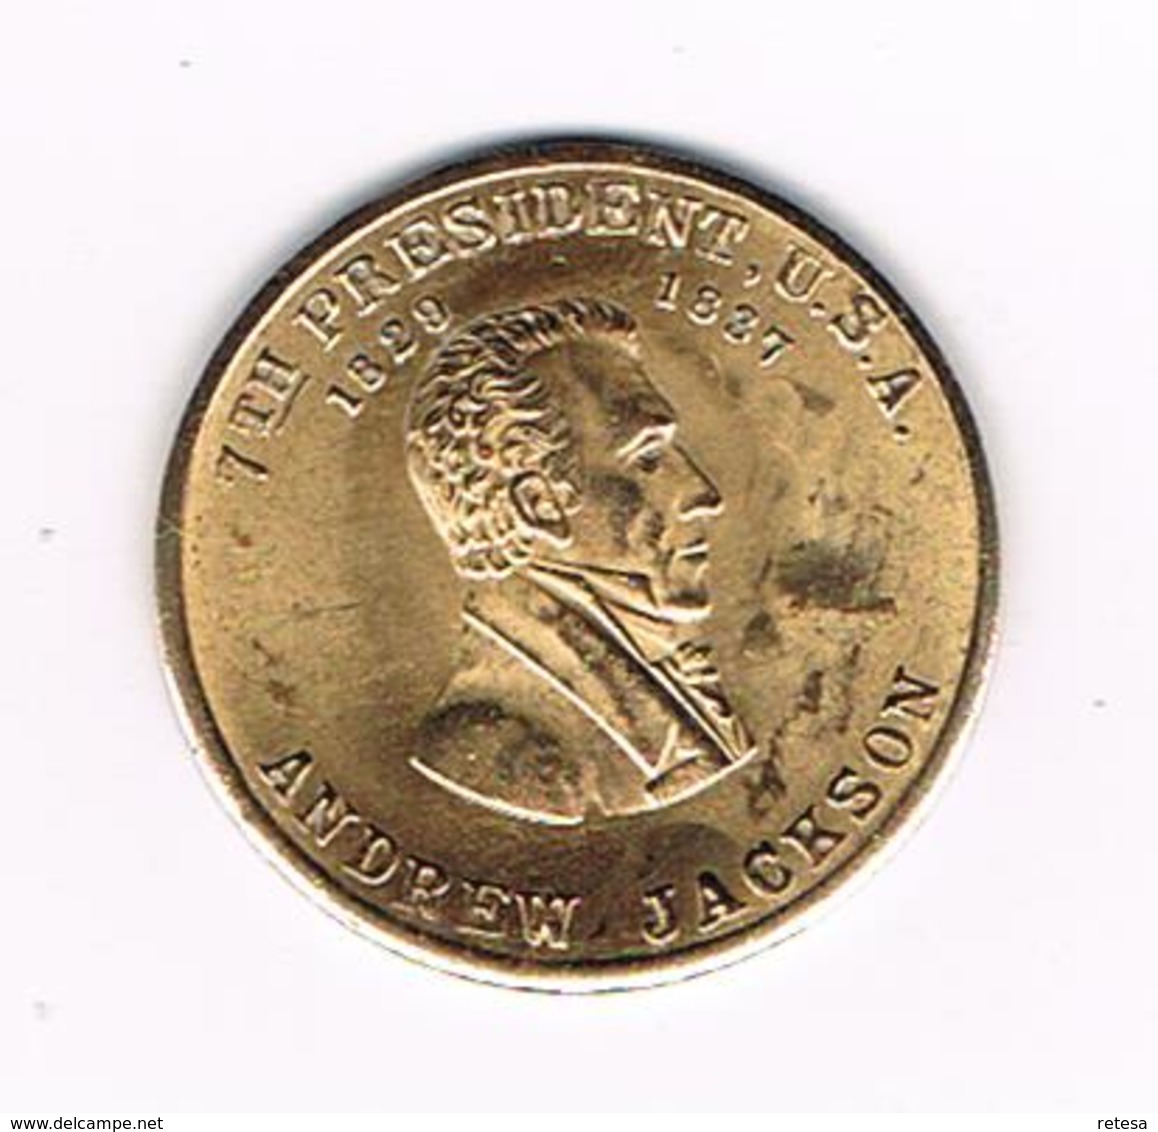 &- PENNING  ANDREW  JACKSON  7 TH  PRESIDENT  U.S.A. - Monete Allungate (penny Souvenirs)